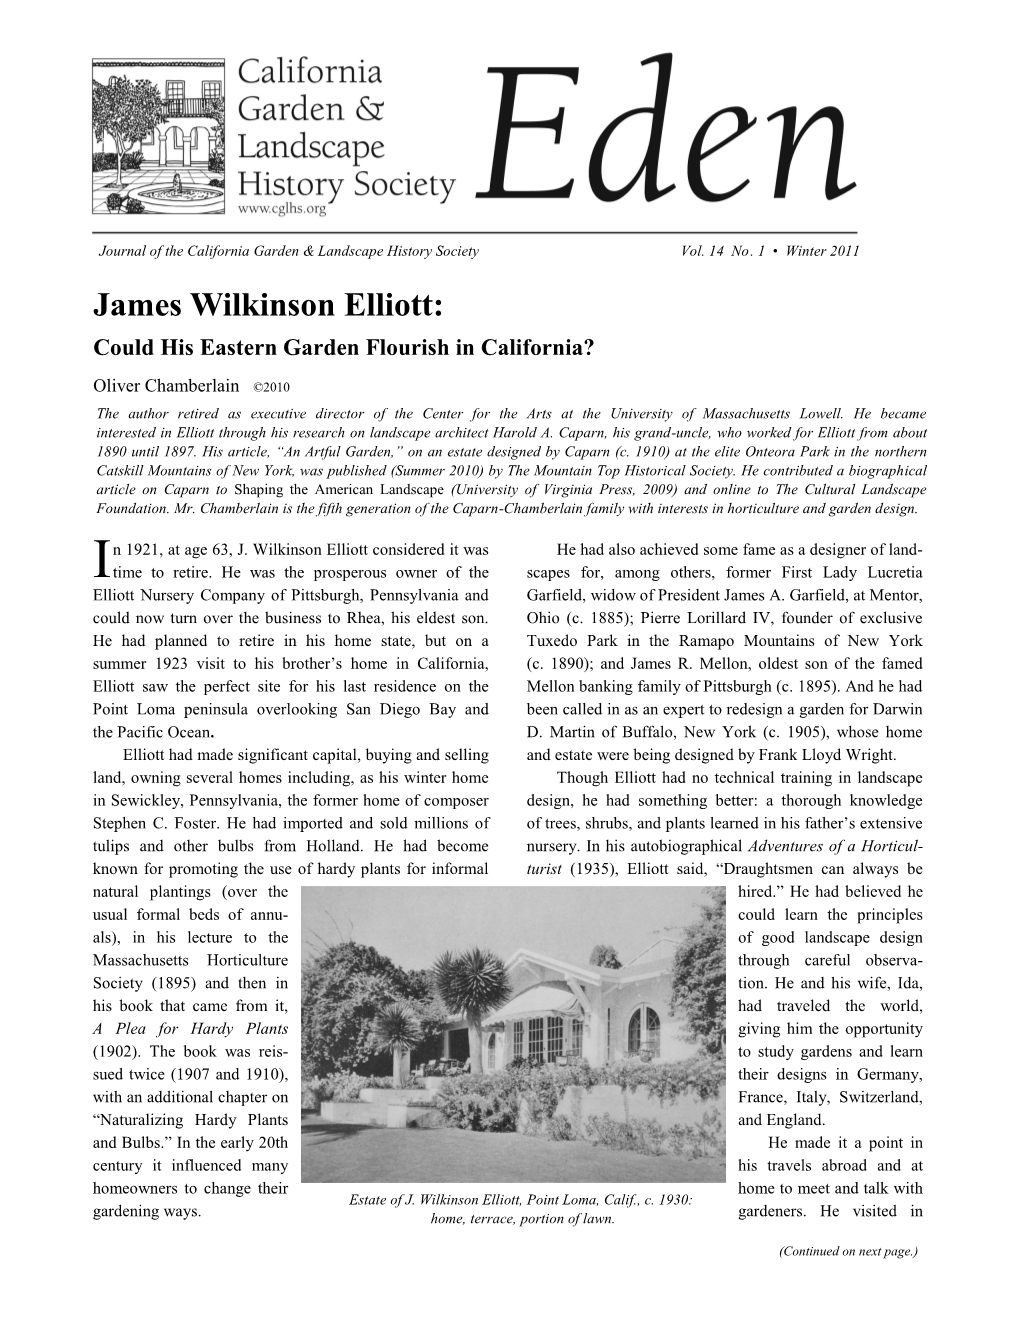 James Wilkinson Elliott: Could His Eastern Garden Flourish in California?